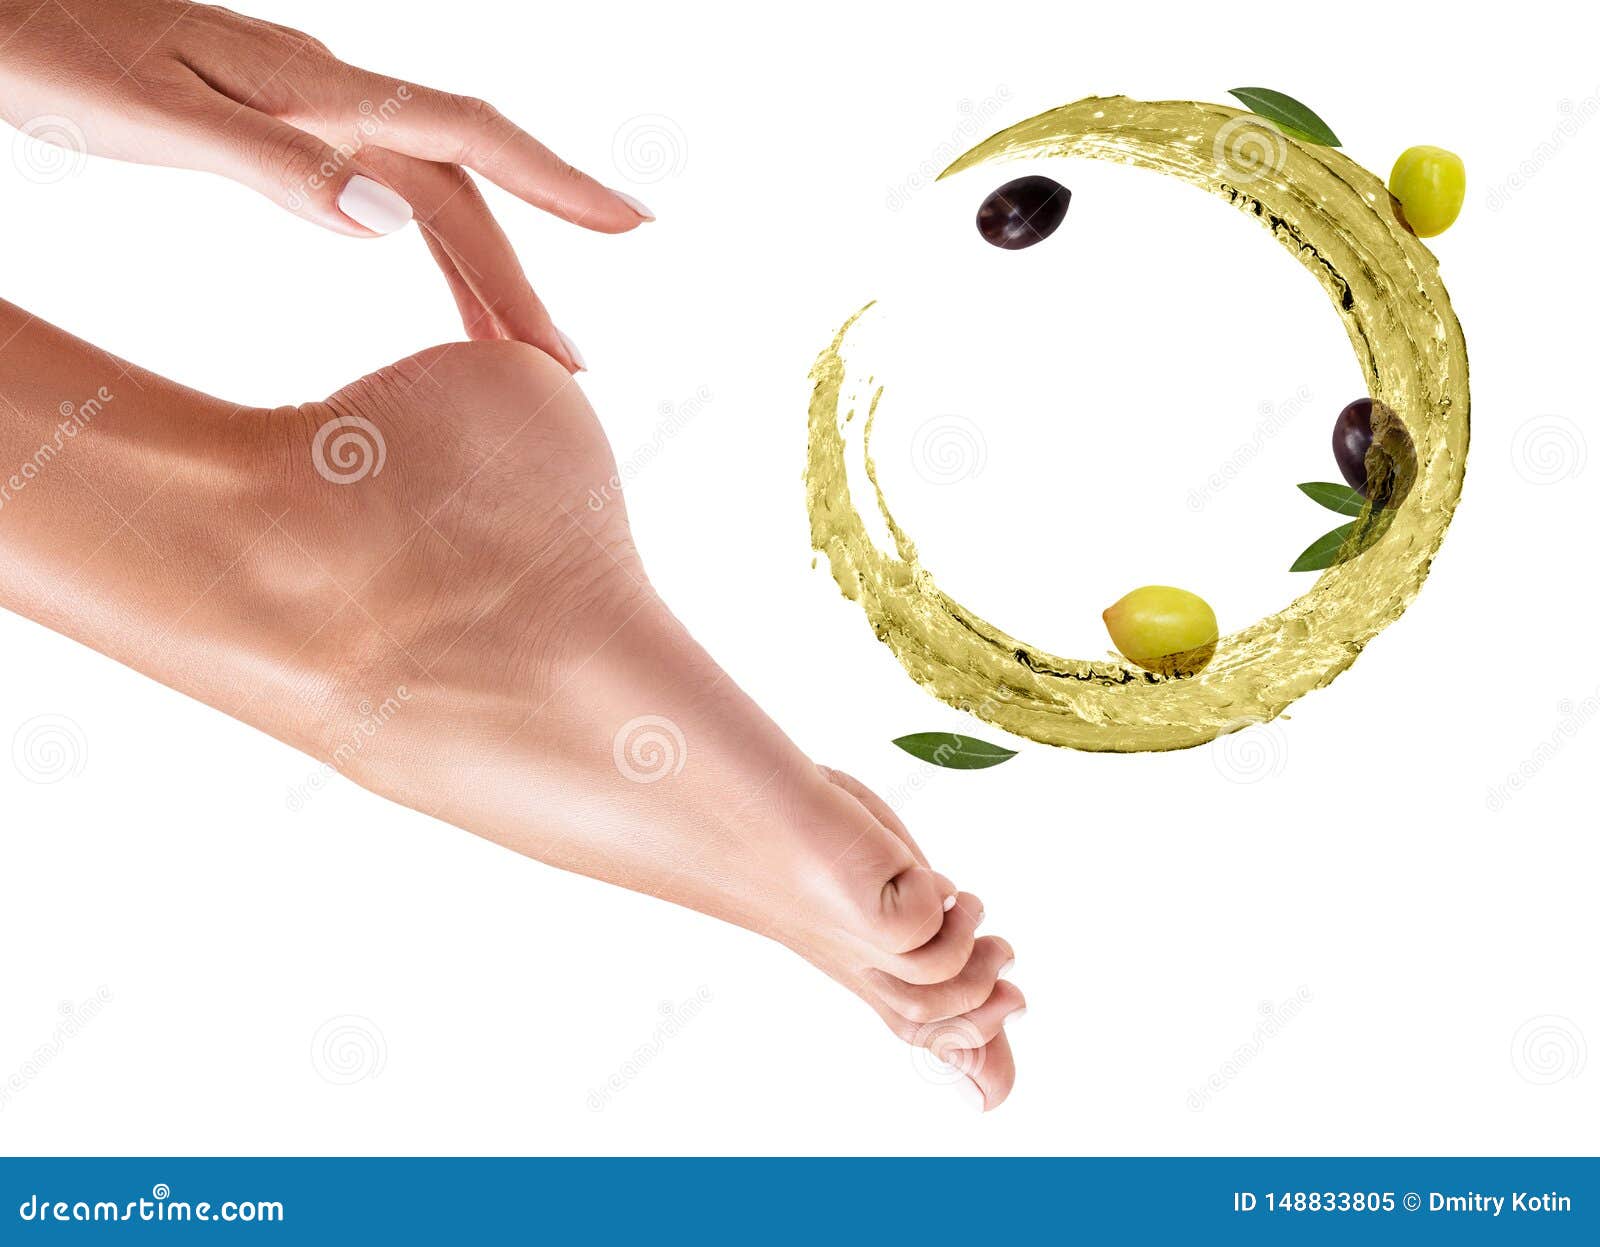 circulate splash of olive oil near female feet. skincare concept.